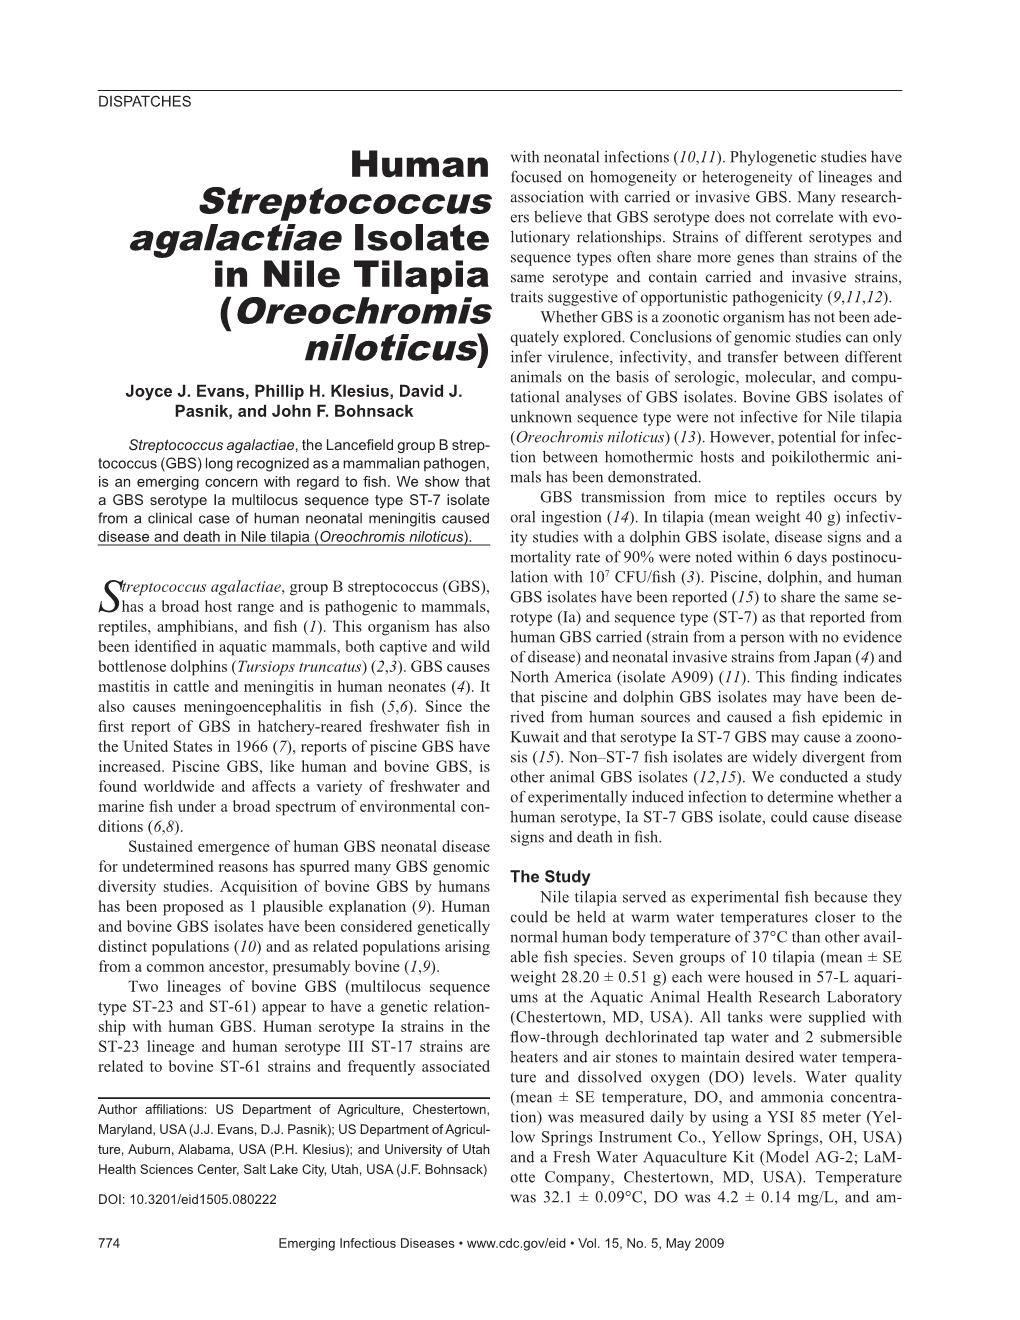 Streptococcus Agalactiae Isolate (Oreochromis Niloticus)